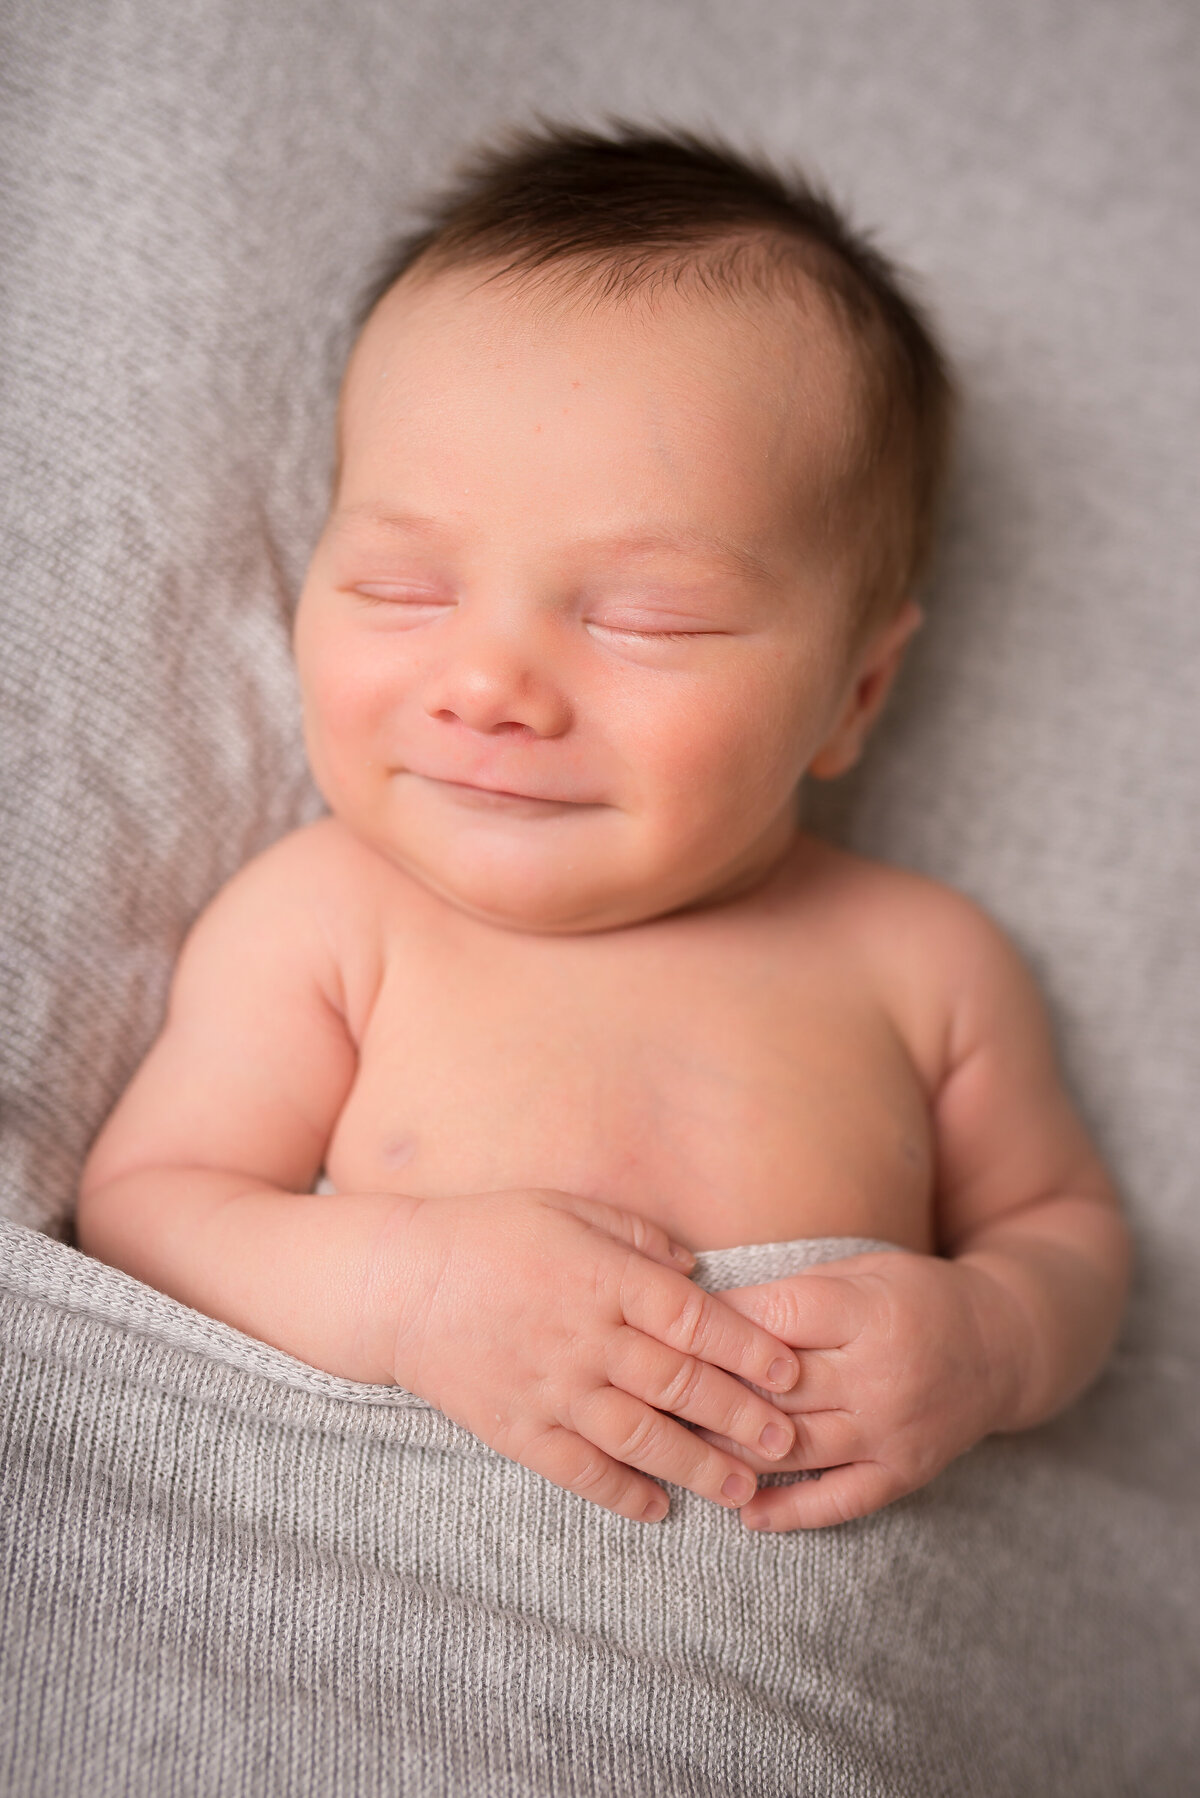 baby smiles, baby fingers, sweet newborn in gray wrap